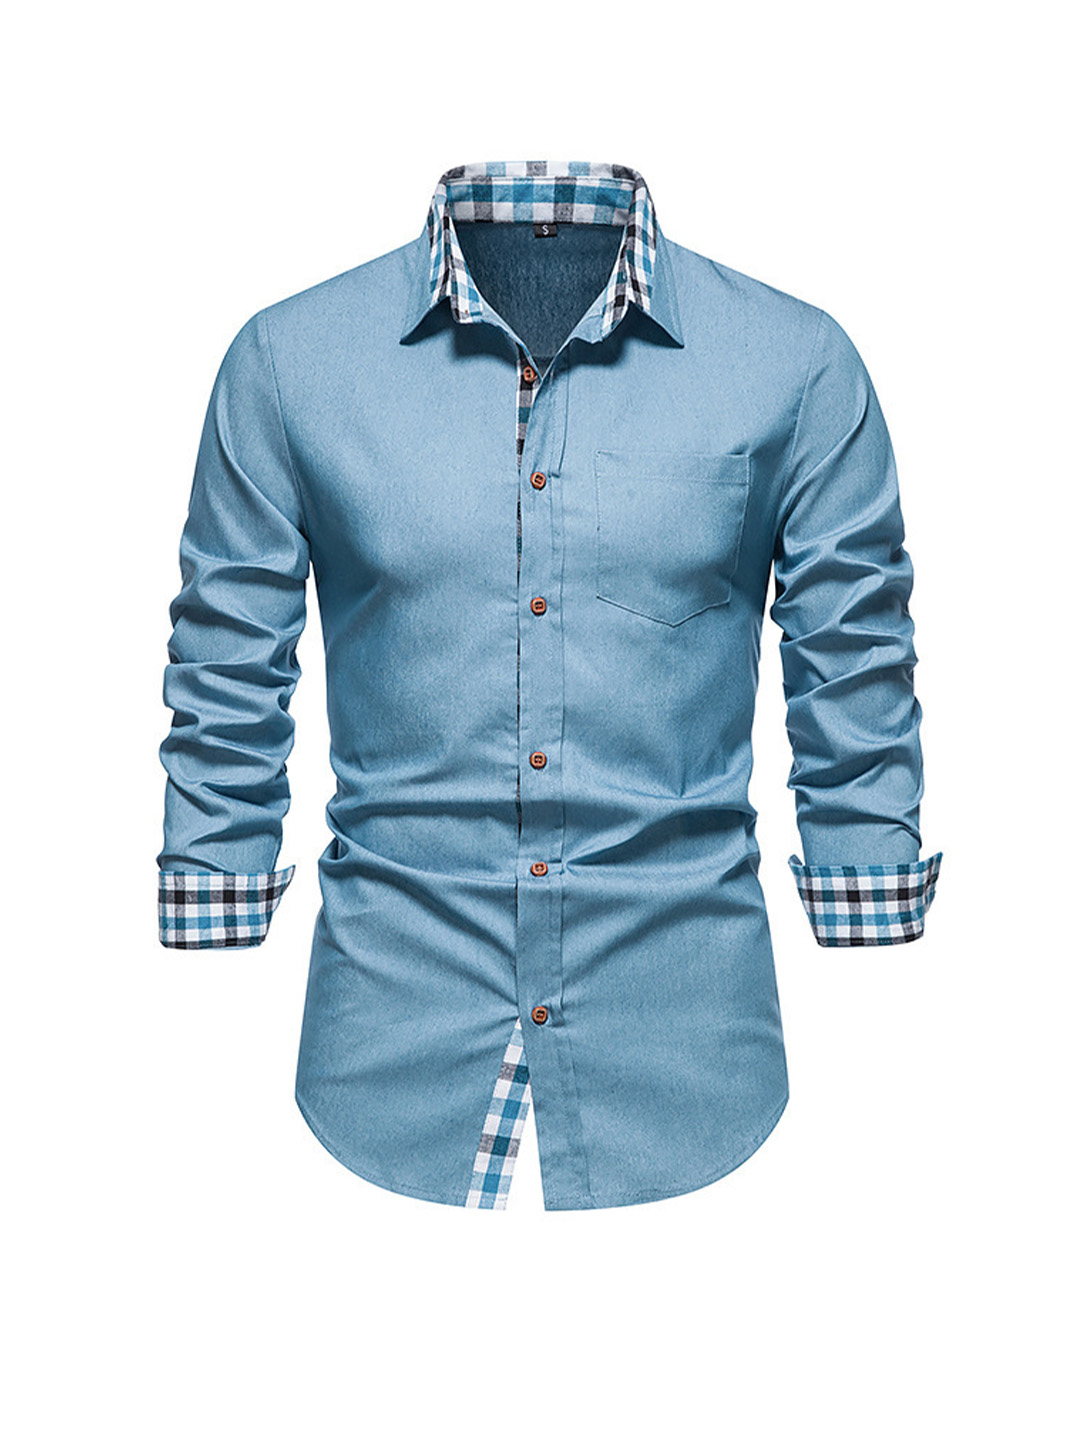 2022 spring new men's casual formal shirt buttoned shirt amazon european code long-sleeved denim shirt men